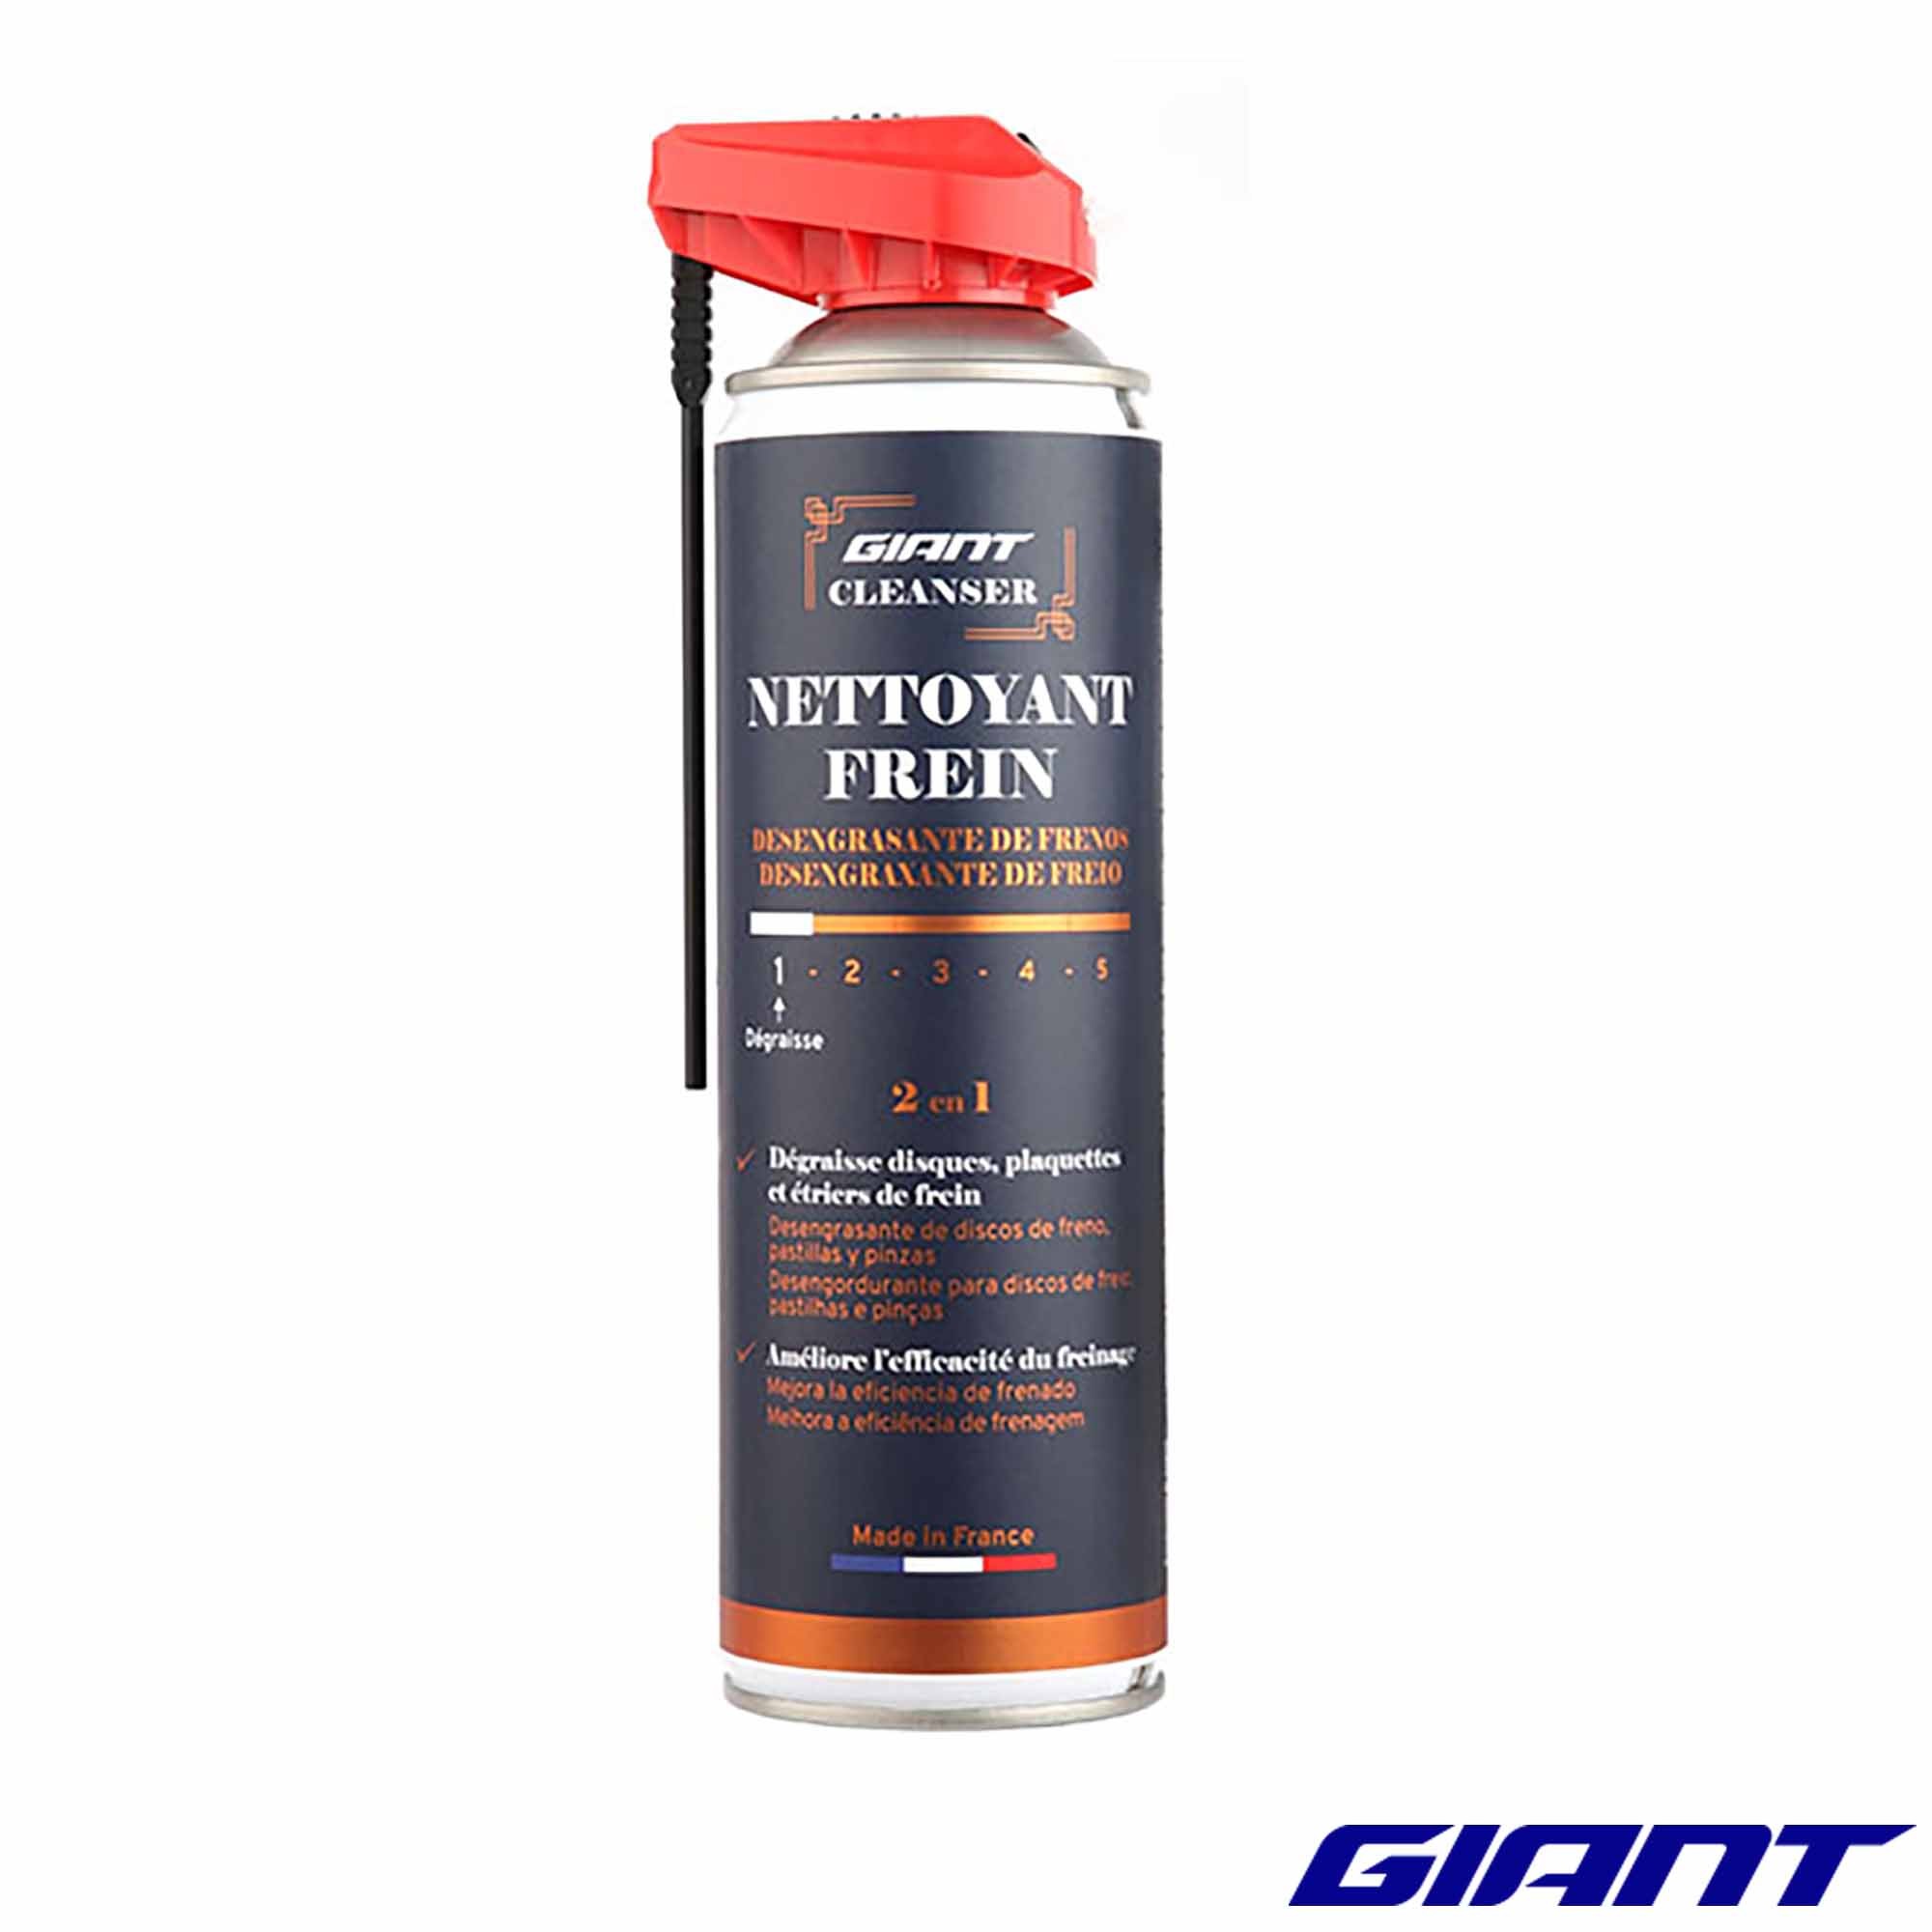 Nettoyant freins GIANT Cleanser 500ml